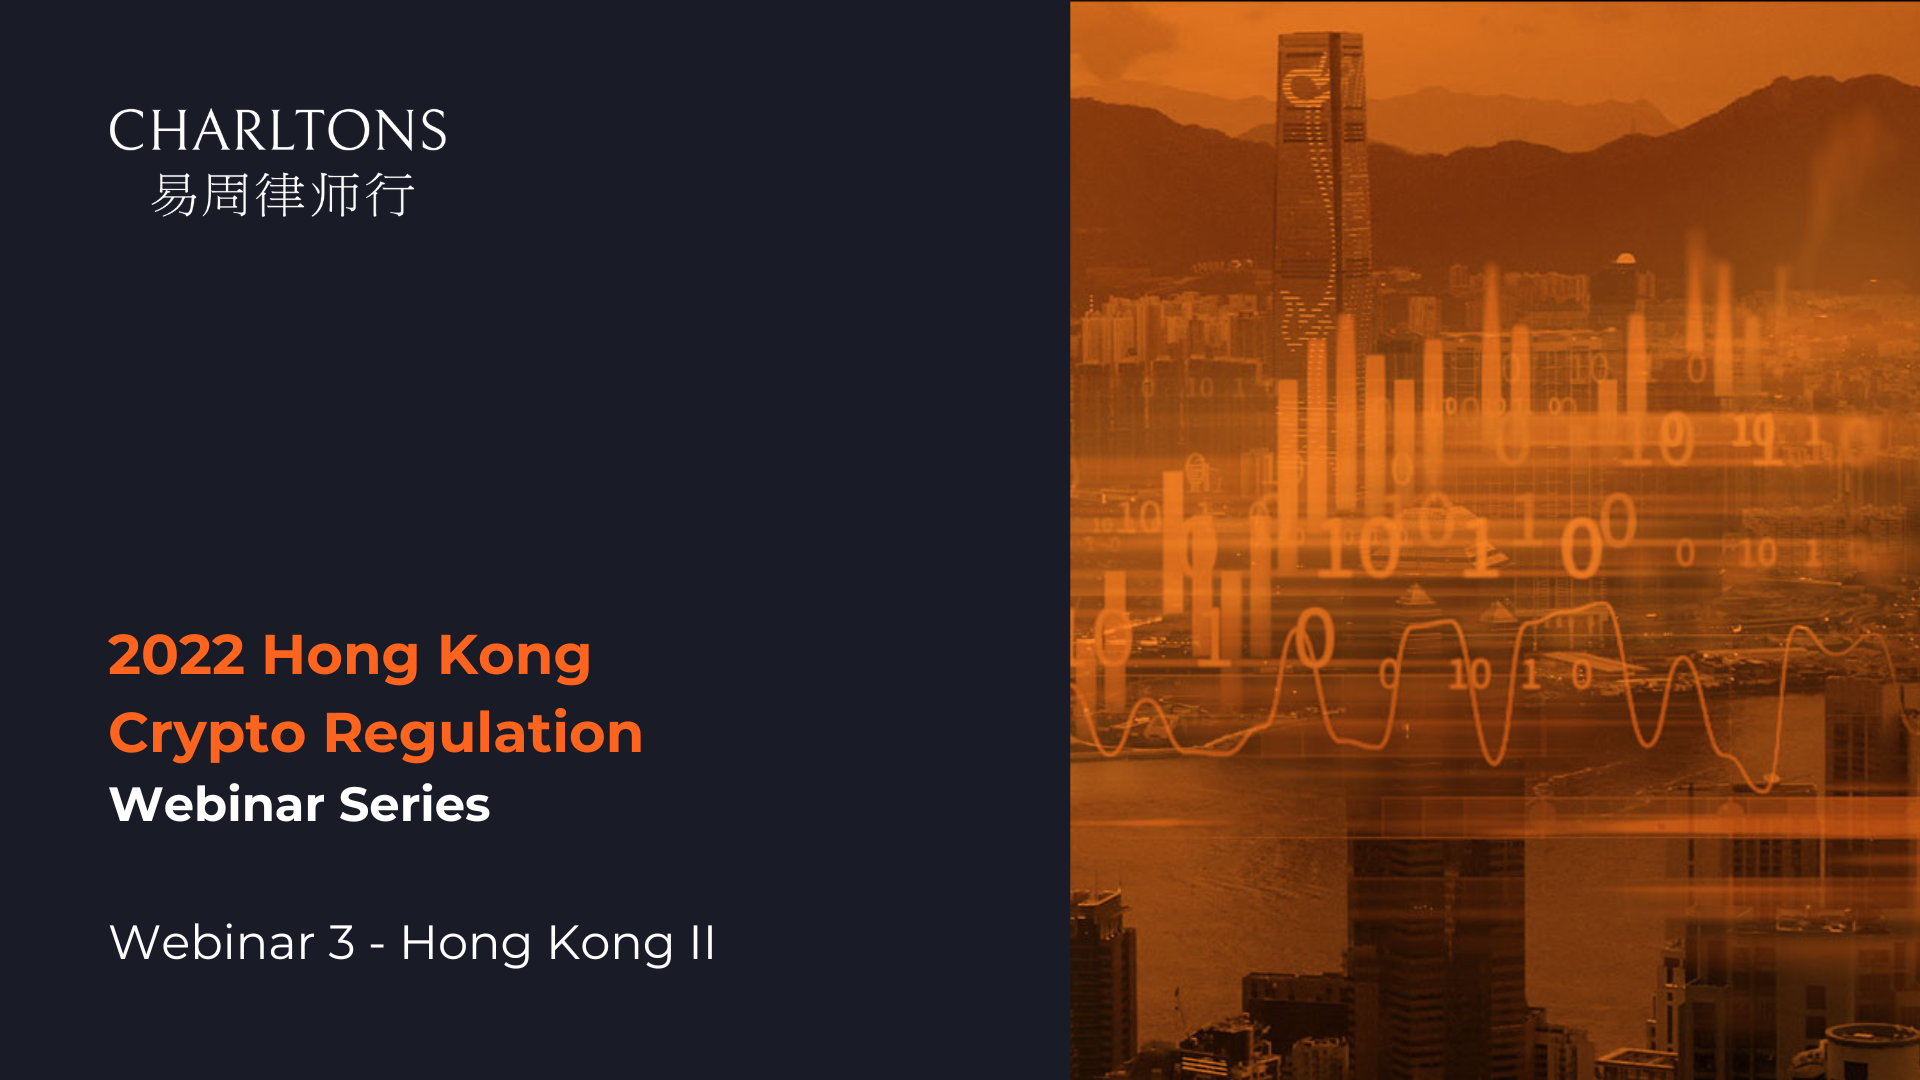 Webinar 3 of Hong Kong Crypto Regulation Webinar Series 2022